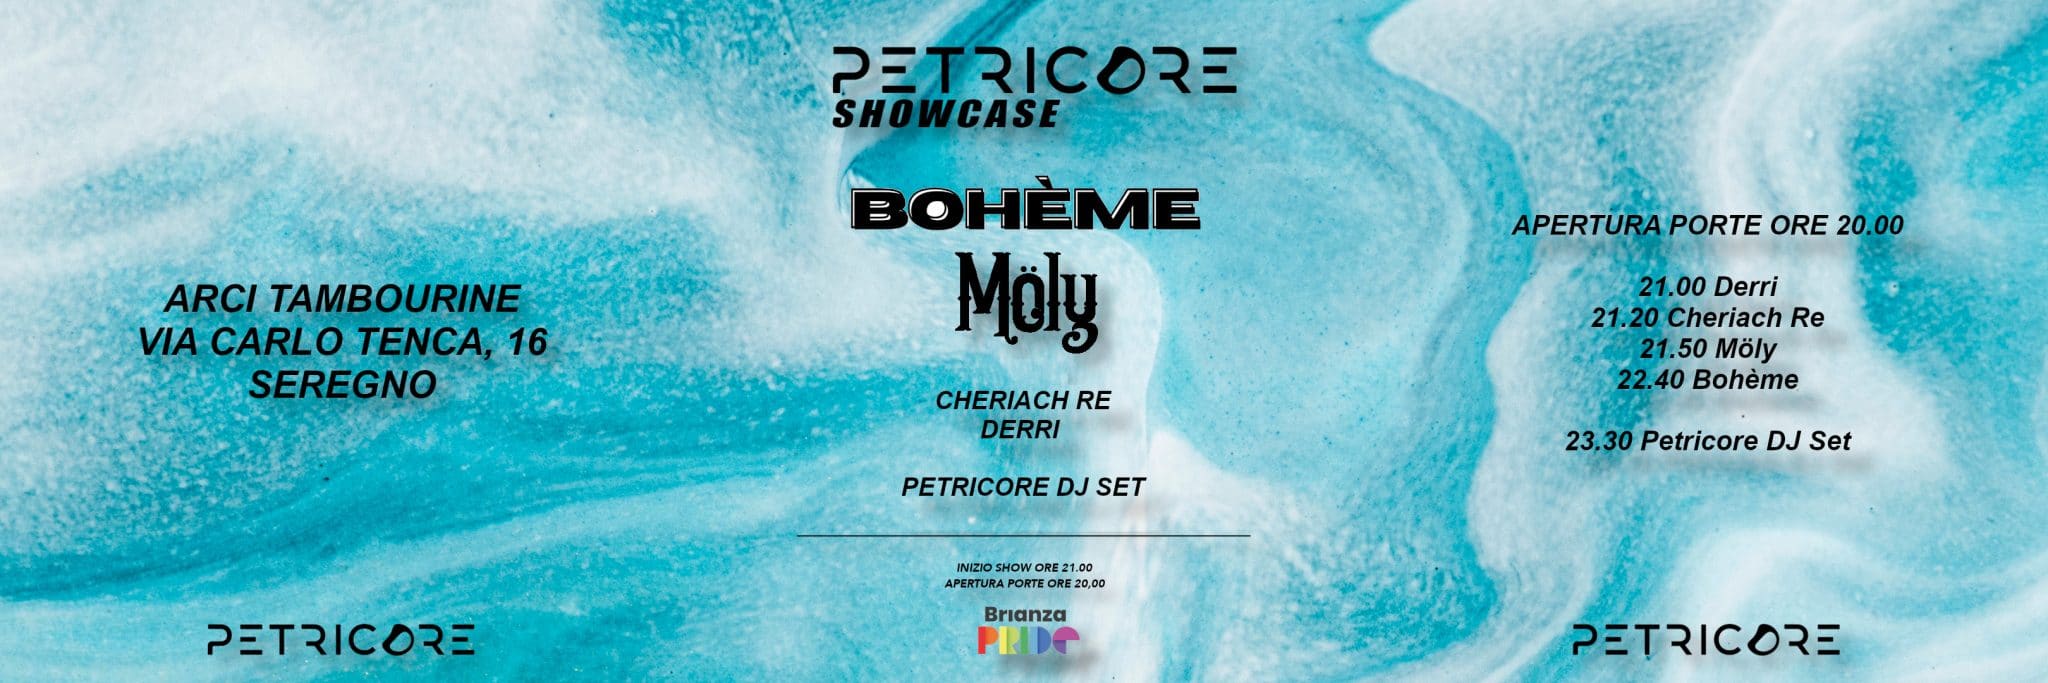 Petricore Showcase_boheme_moly